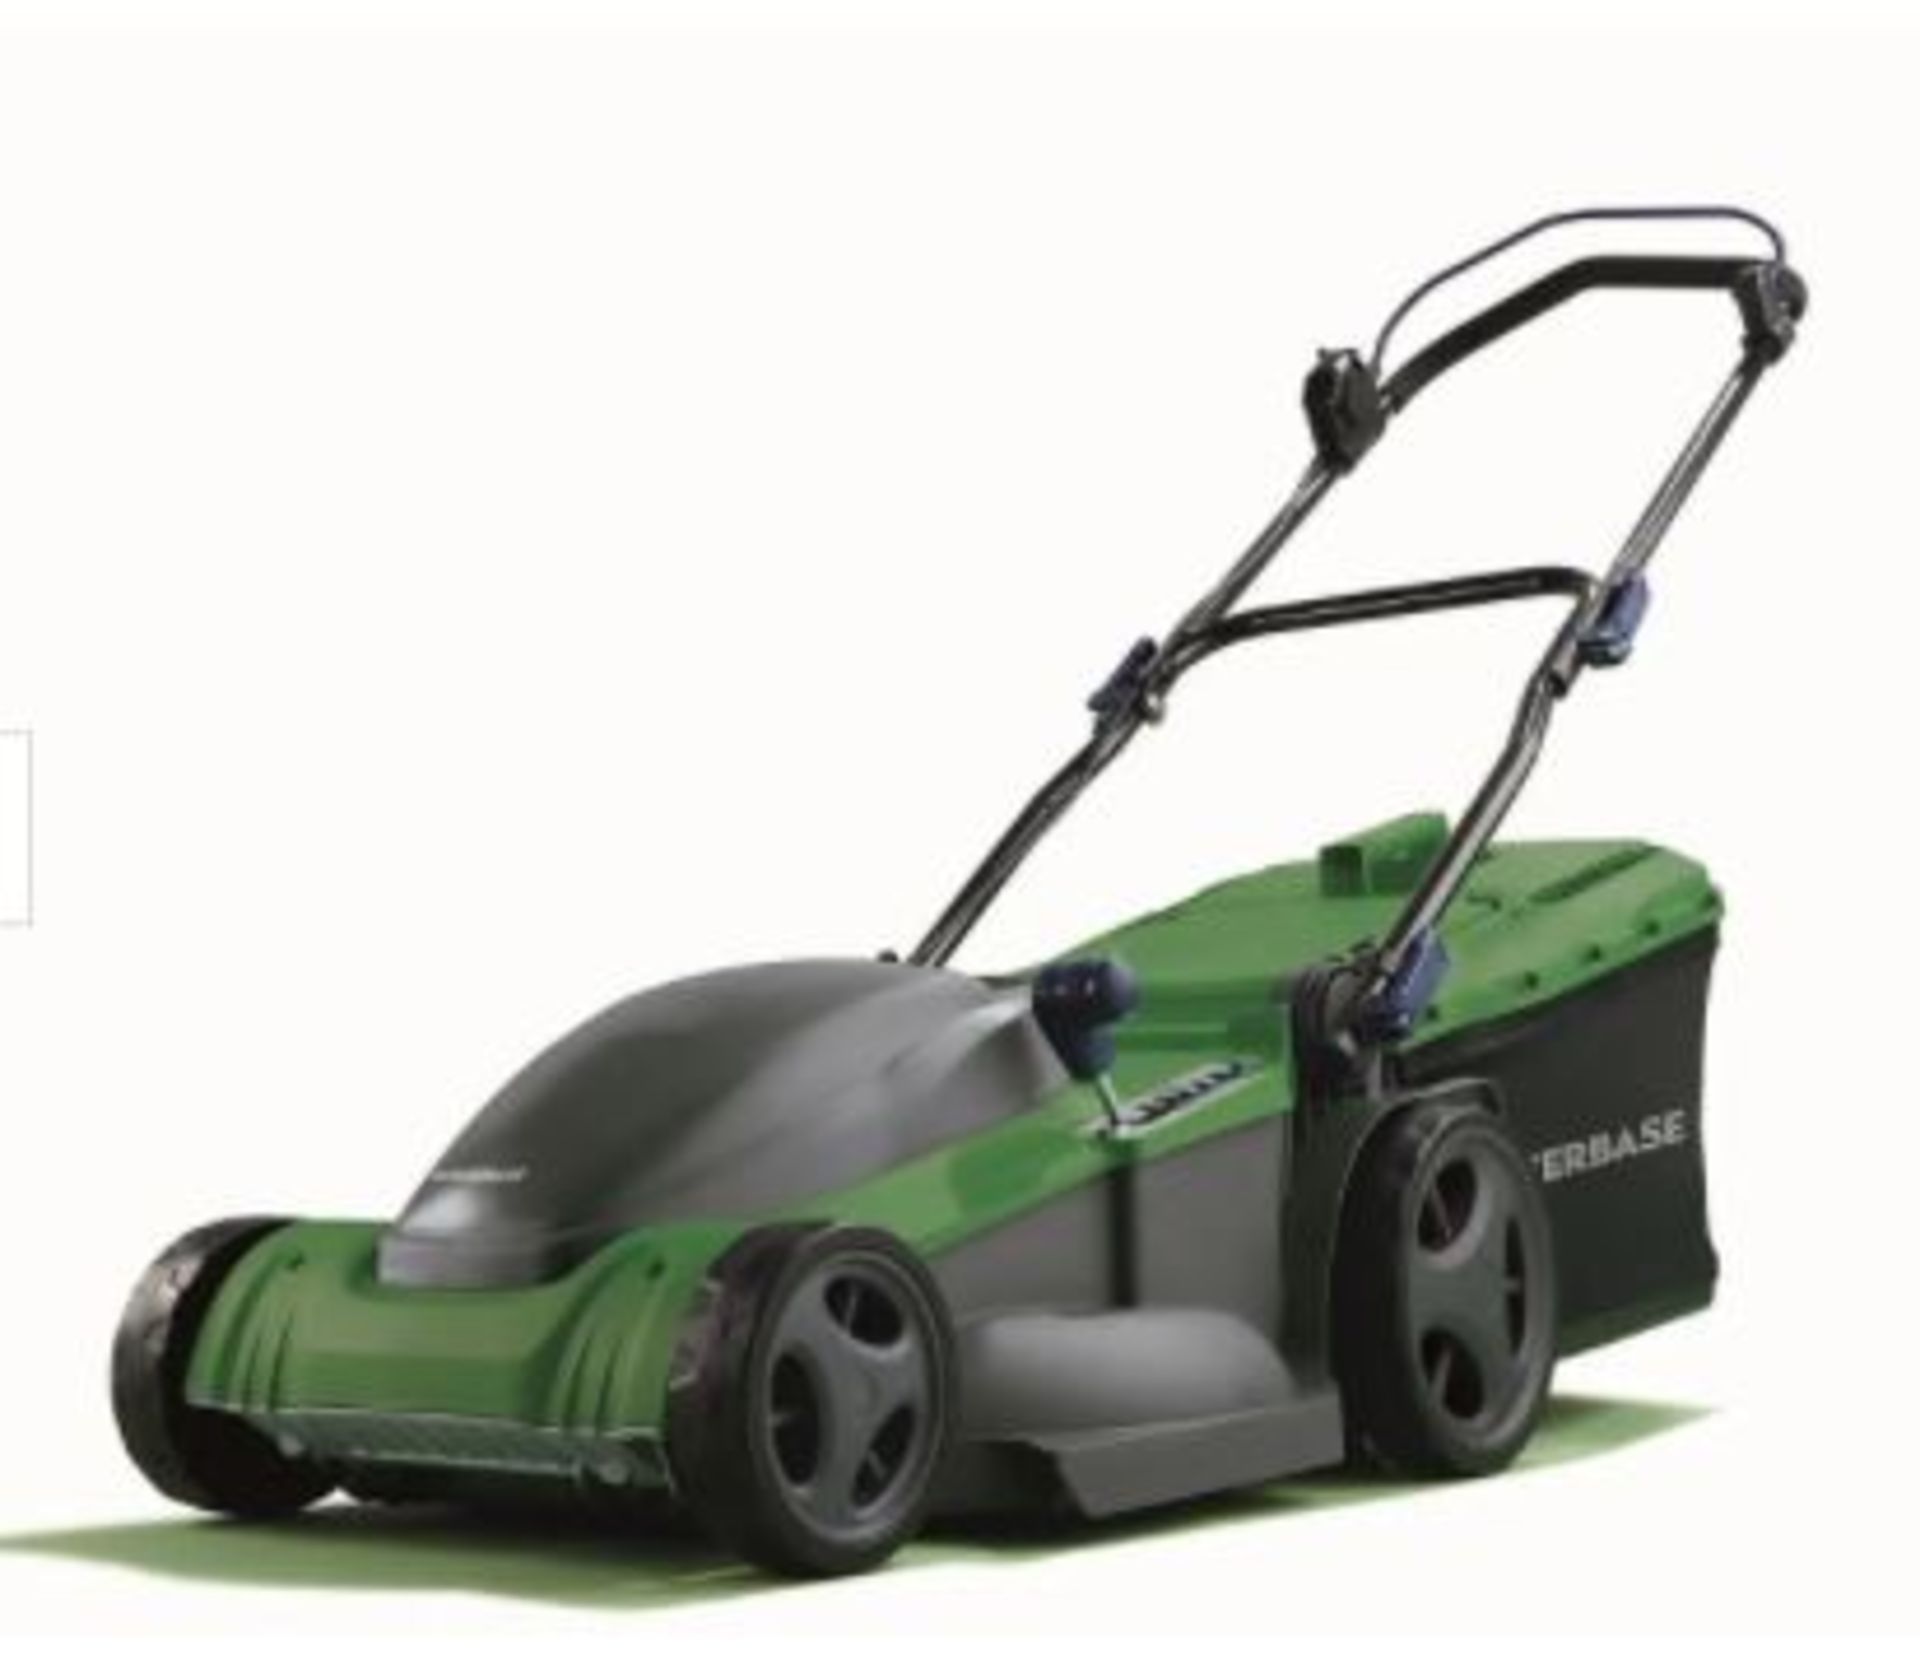 (R3D) 1 X Powerbase 41cm 1800W Electric Rotary Lawn Mower (Appears Unused)